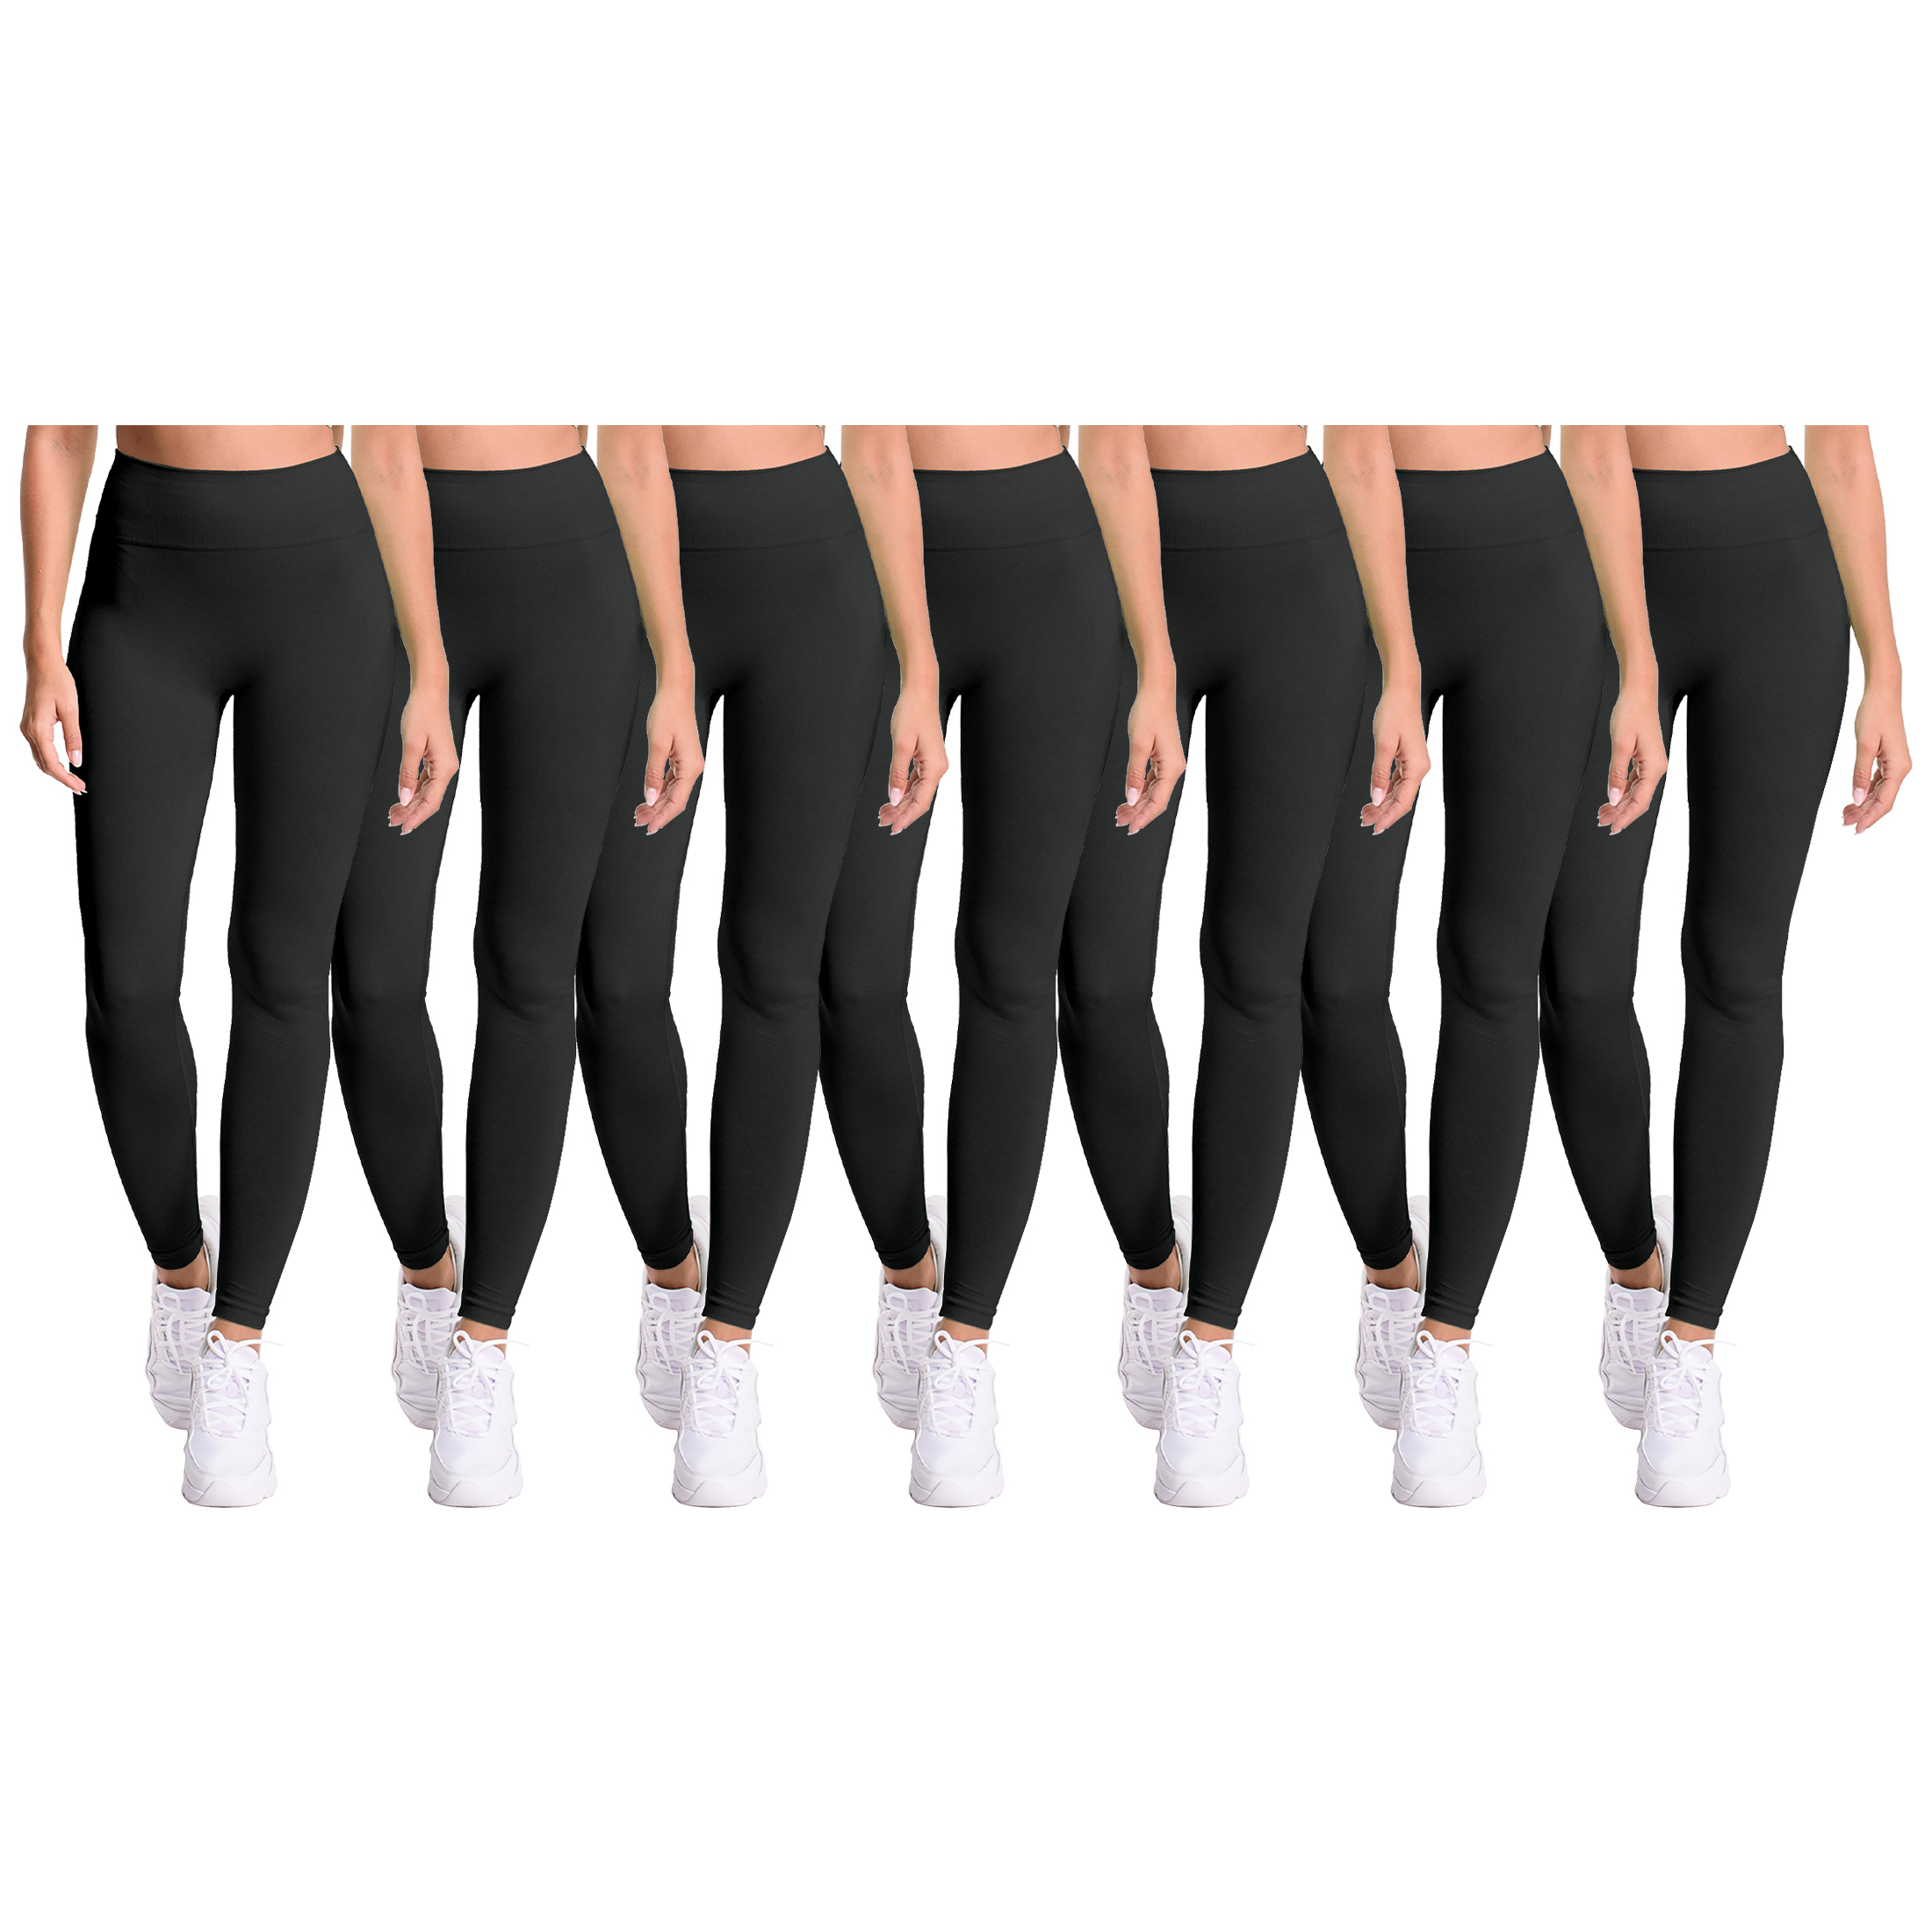 6-Pack: Women's Cozy Fleece-Lined Workout Yoga Pants Seamless Leggings - Black, Small